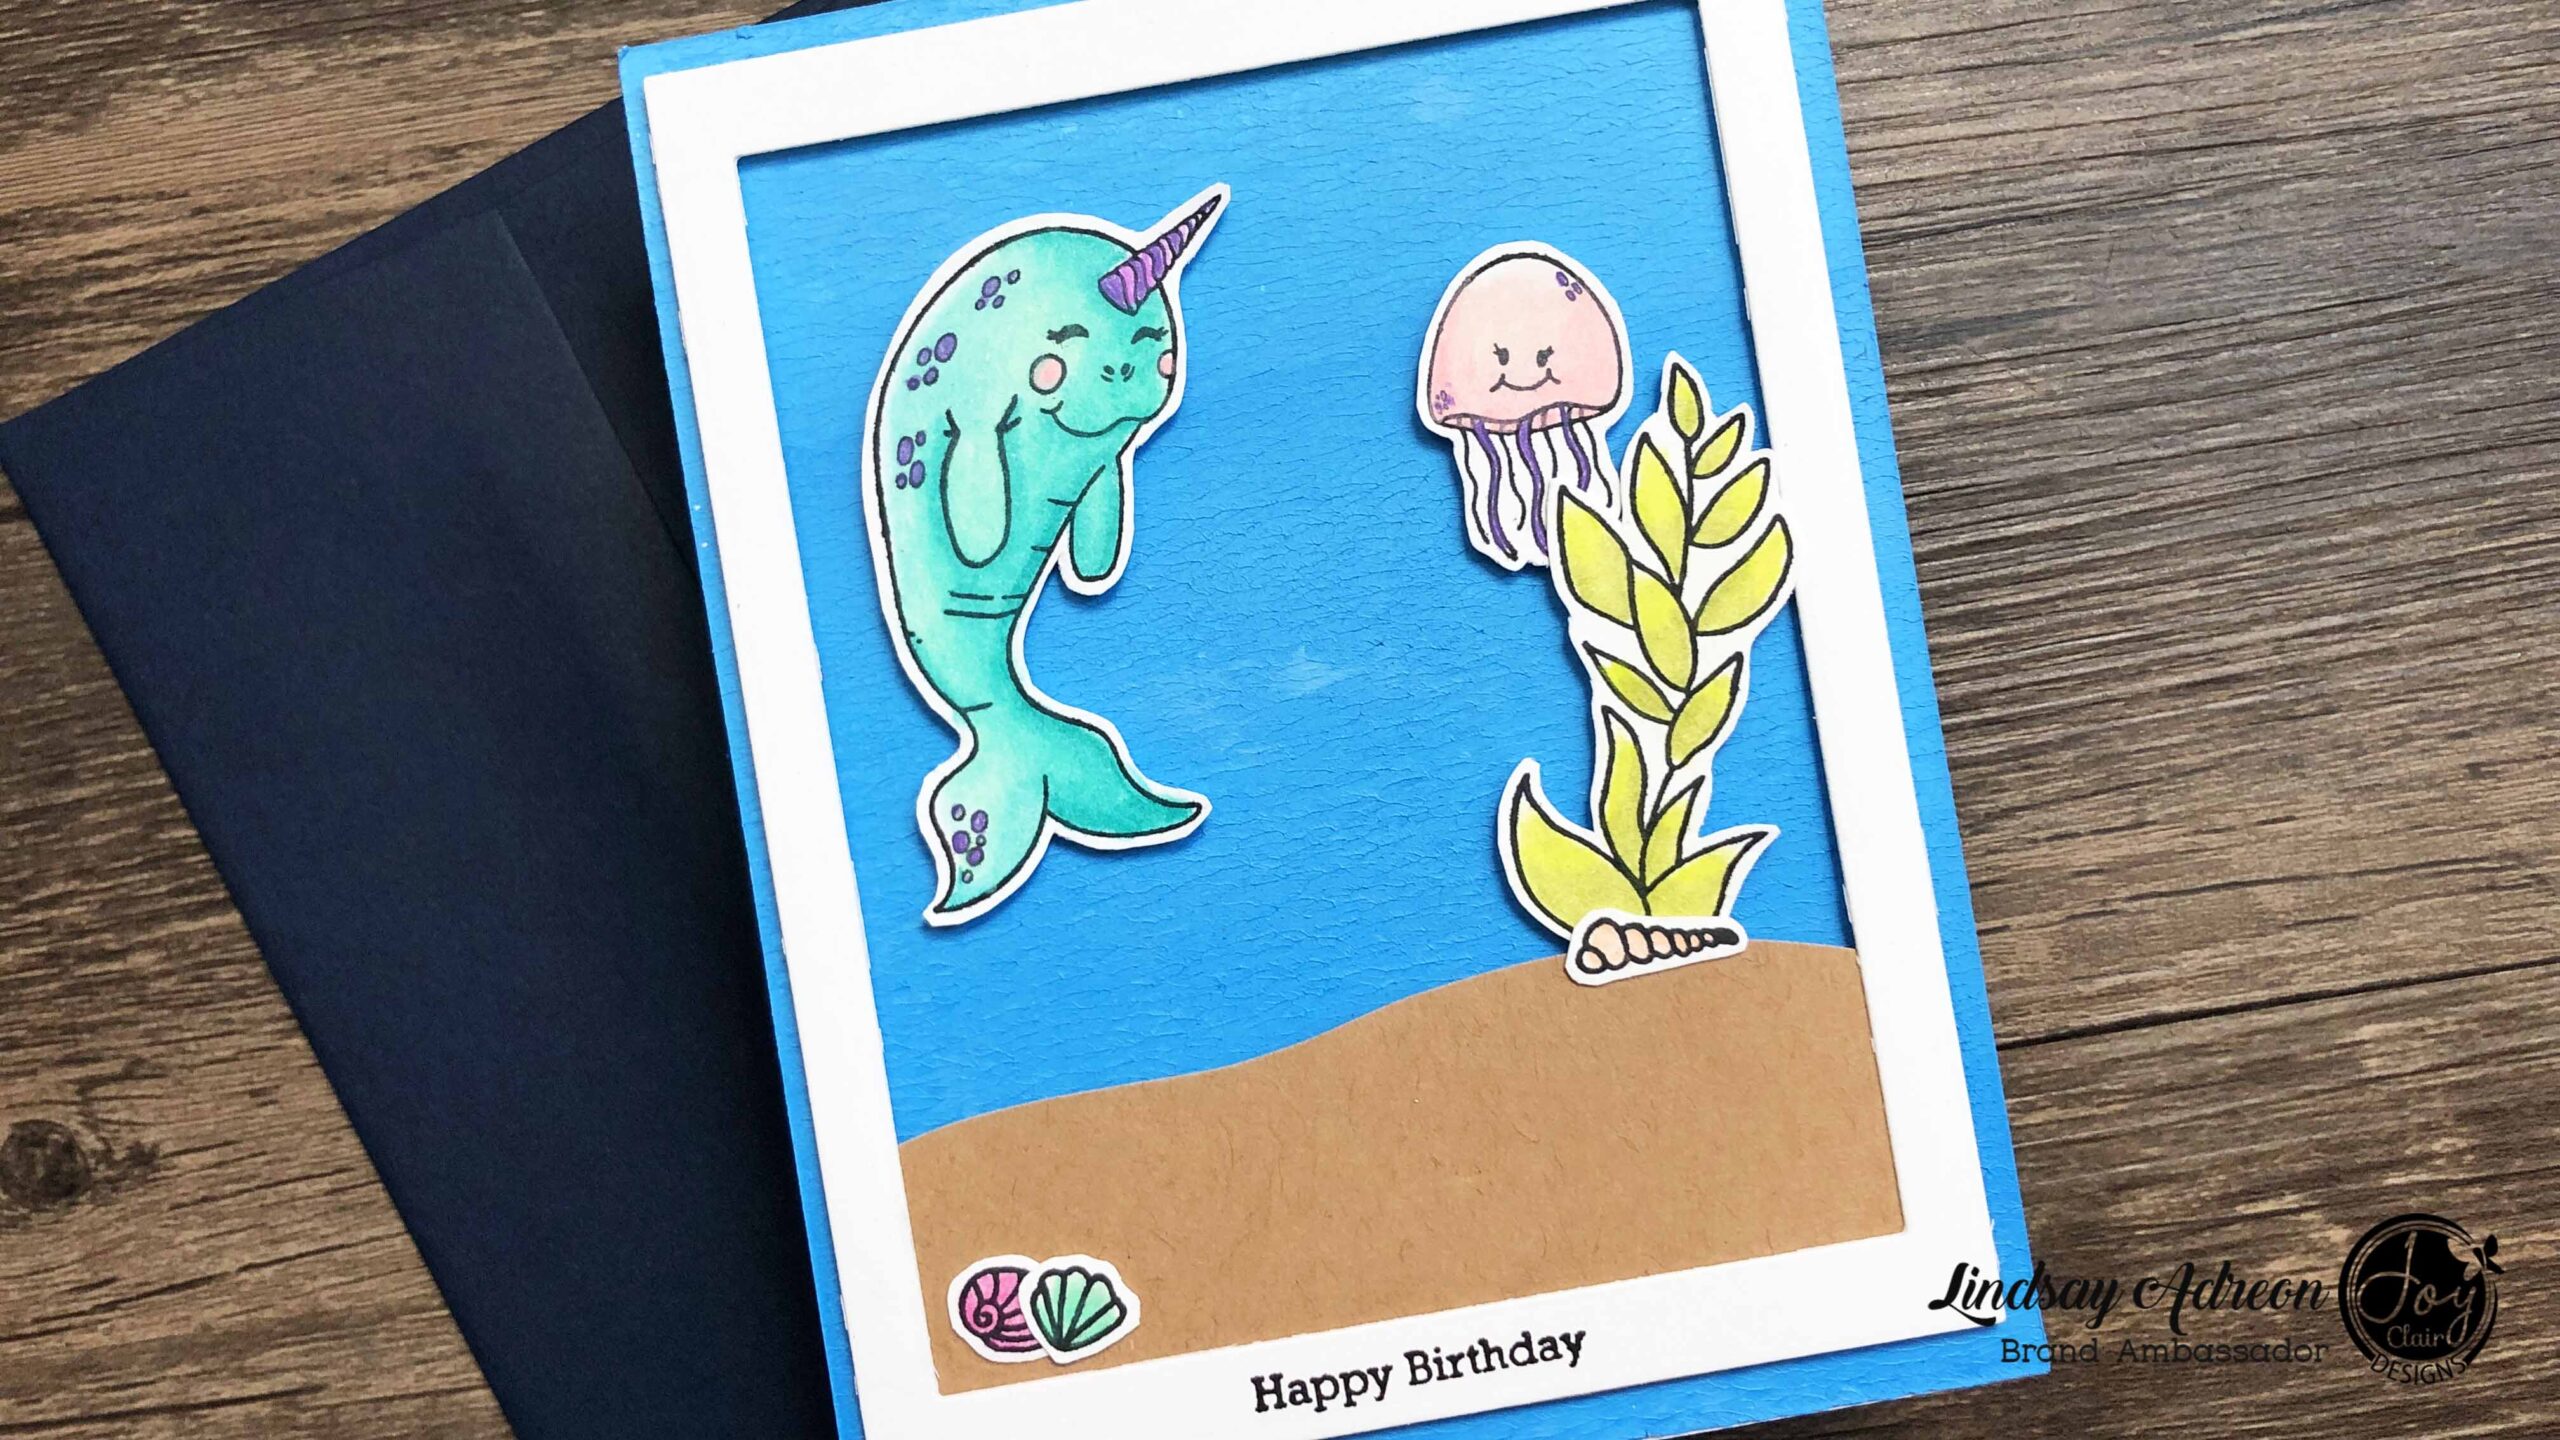 Happy Birthday Brayered Background Handmade Card